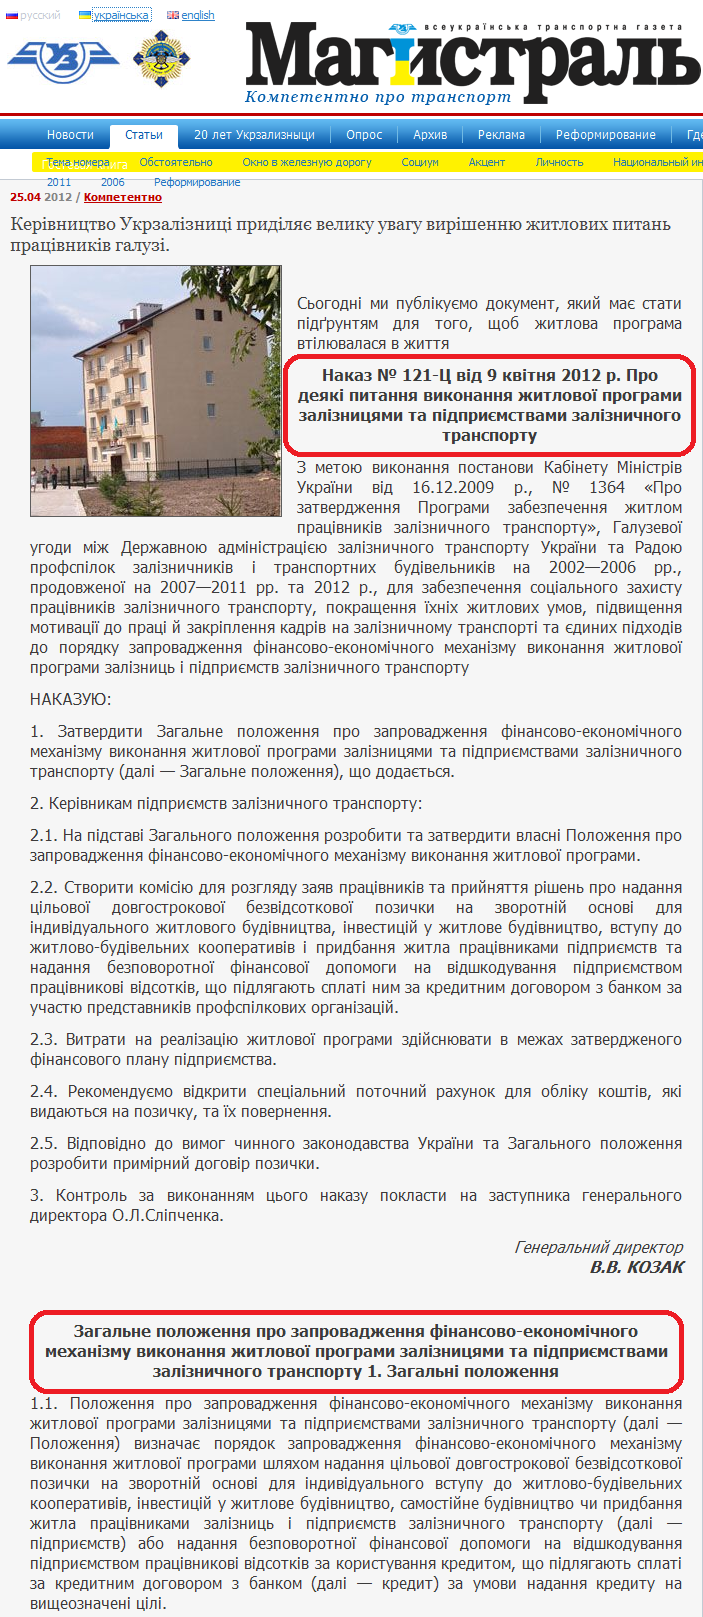 http://ru.magistral-uz.com.ua/articles/nakaz--121-c-vid-9-kvitnja-2012-r--pro-dejaki-pitannja-vikonannja-zhitlovoi-programi-zaliznicjami-ta-pidpriemstvami-zaliznichnogo-transportu.html